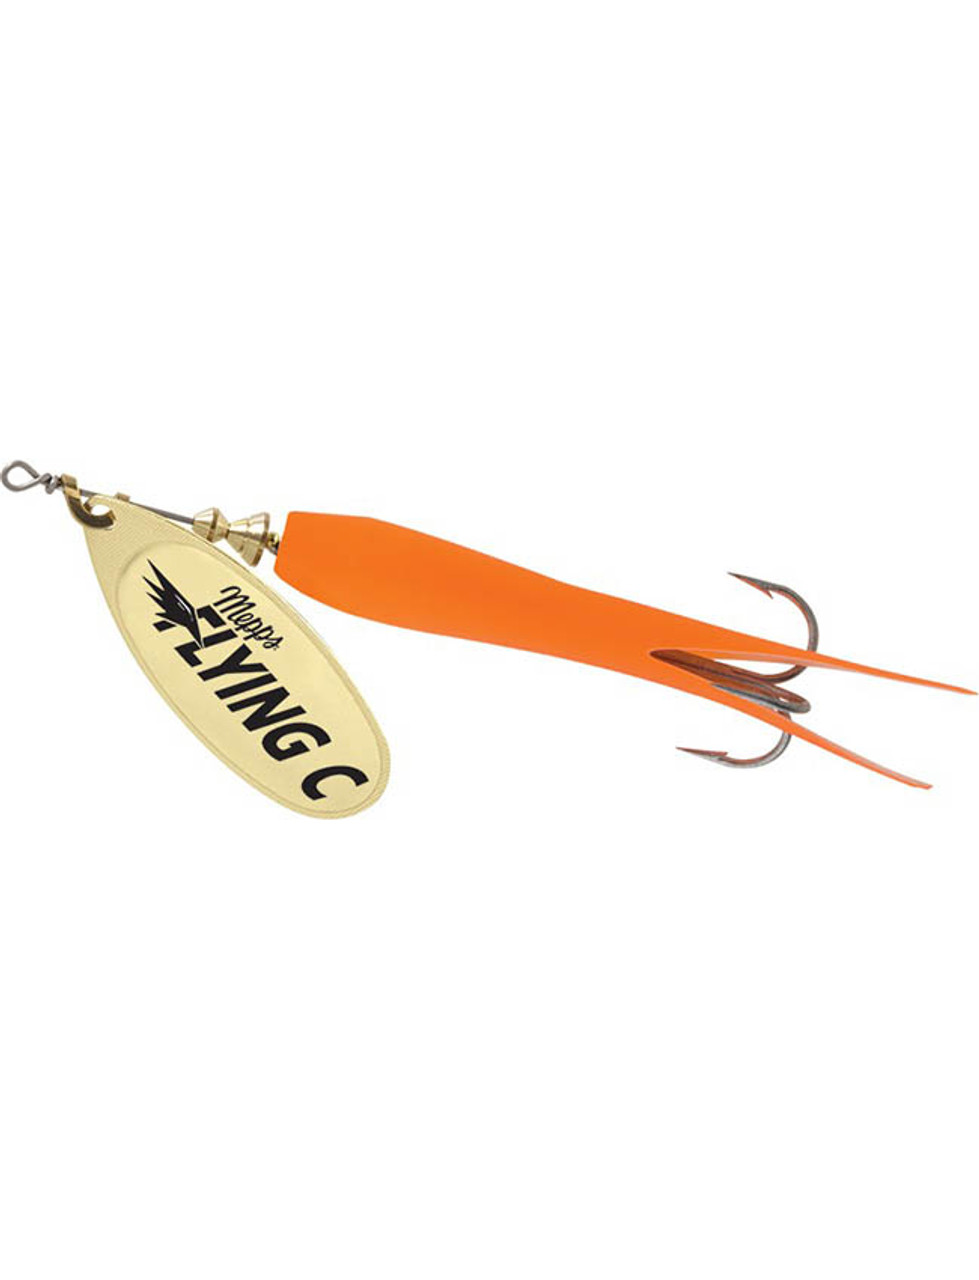 Mepps Flying C Lure - Hot Orange Sleeve & Gold Blade